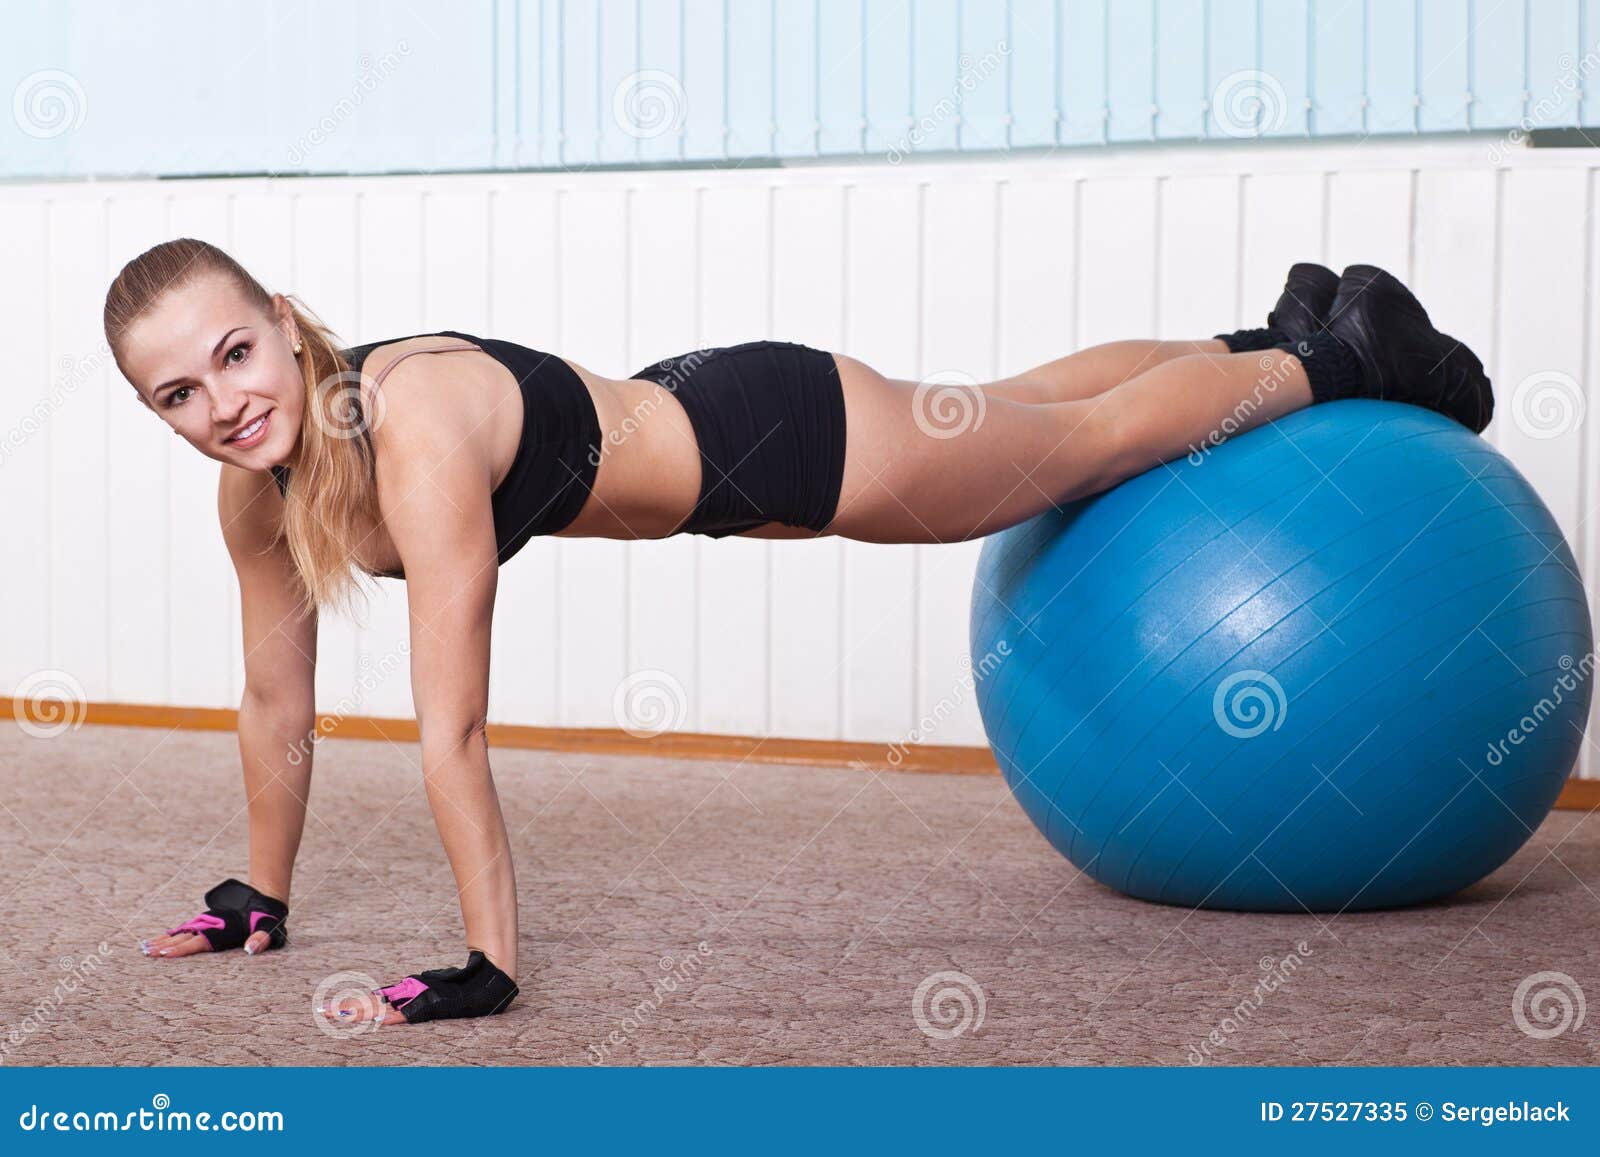 fitness-woman-doing-push-up-ball-27527335.jpg